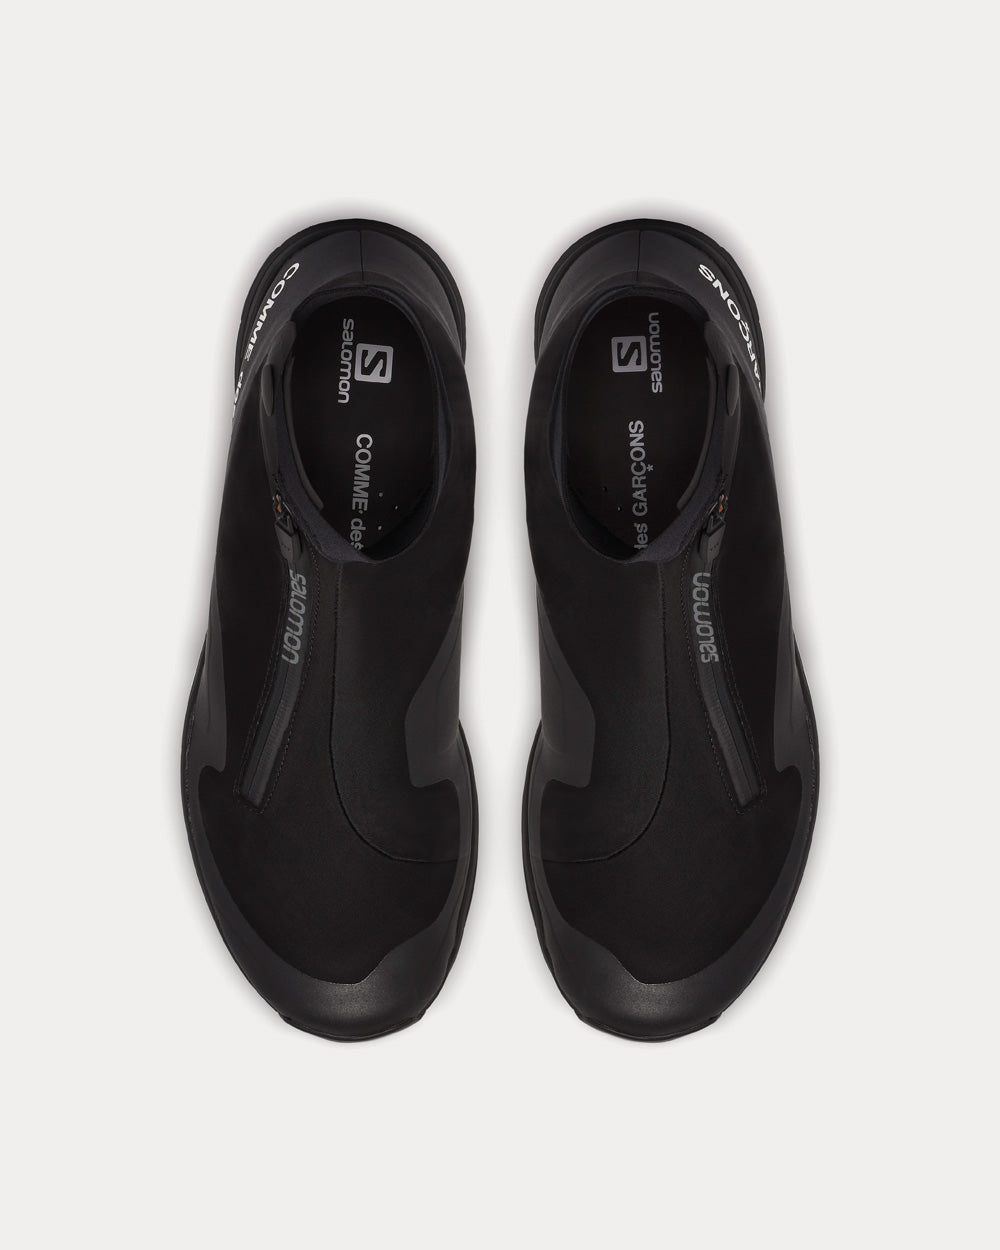 Salomon x Comme des Garçons - XA-Alpine 2 Black High Top Sneakers